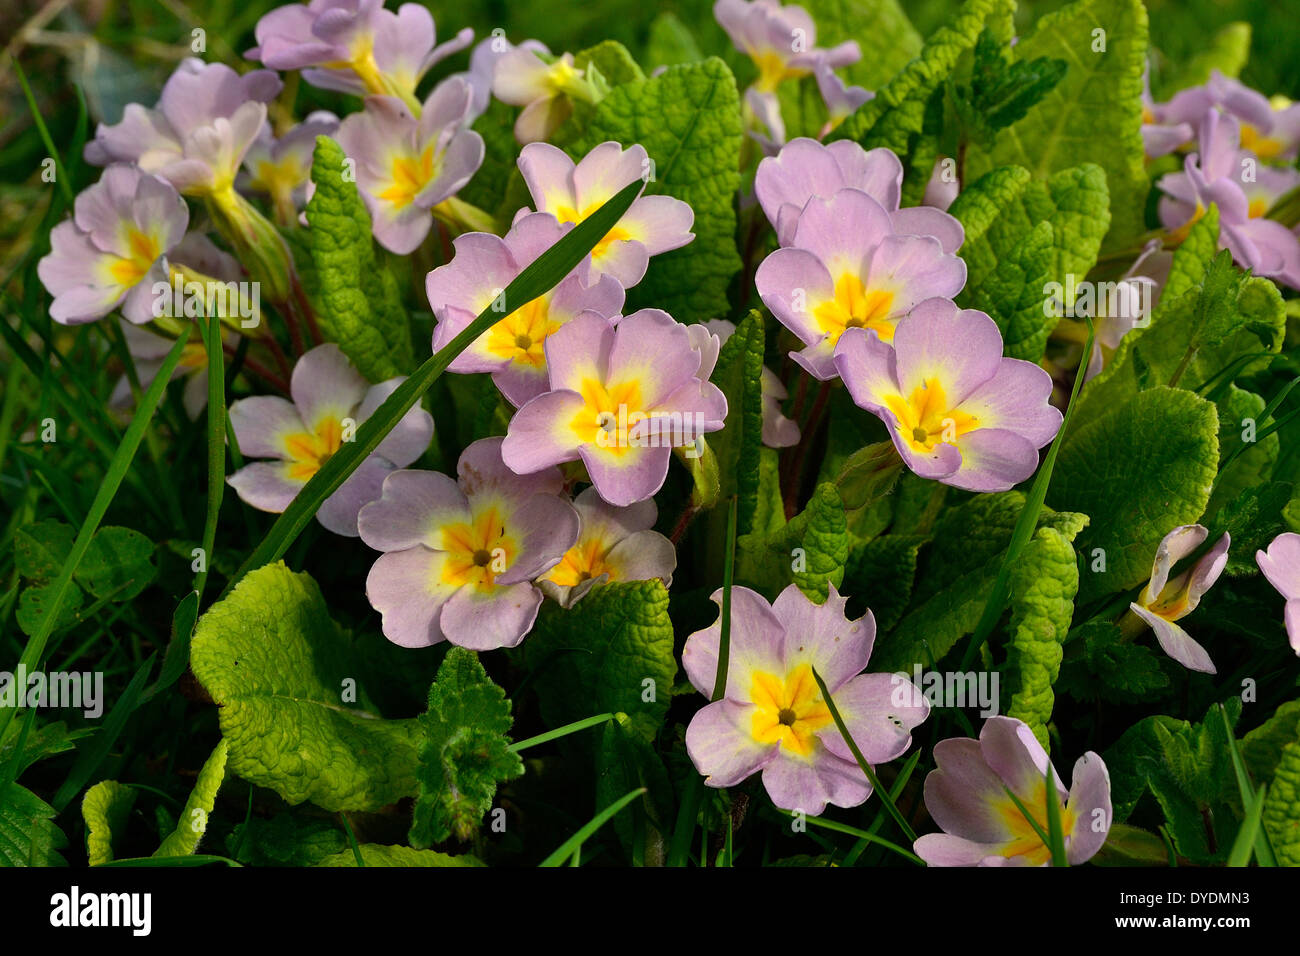 Primroses (Primula vulgaris) in flower at spring, in a garden. Stock Photo